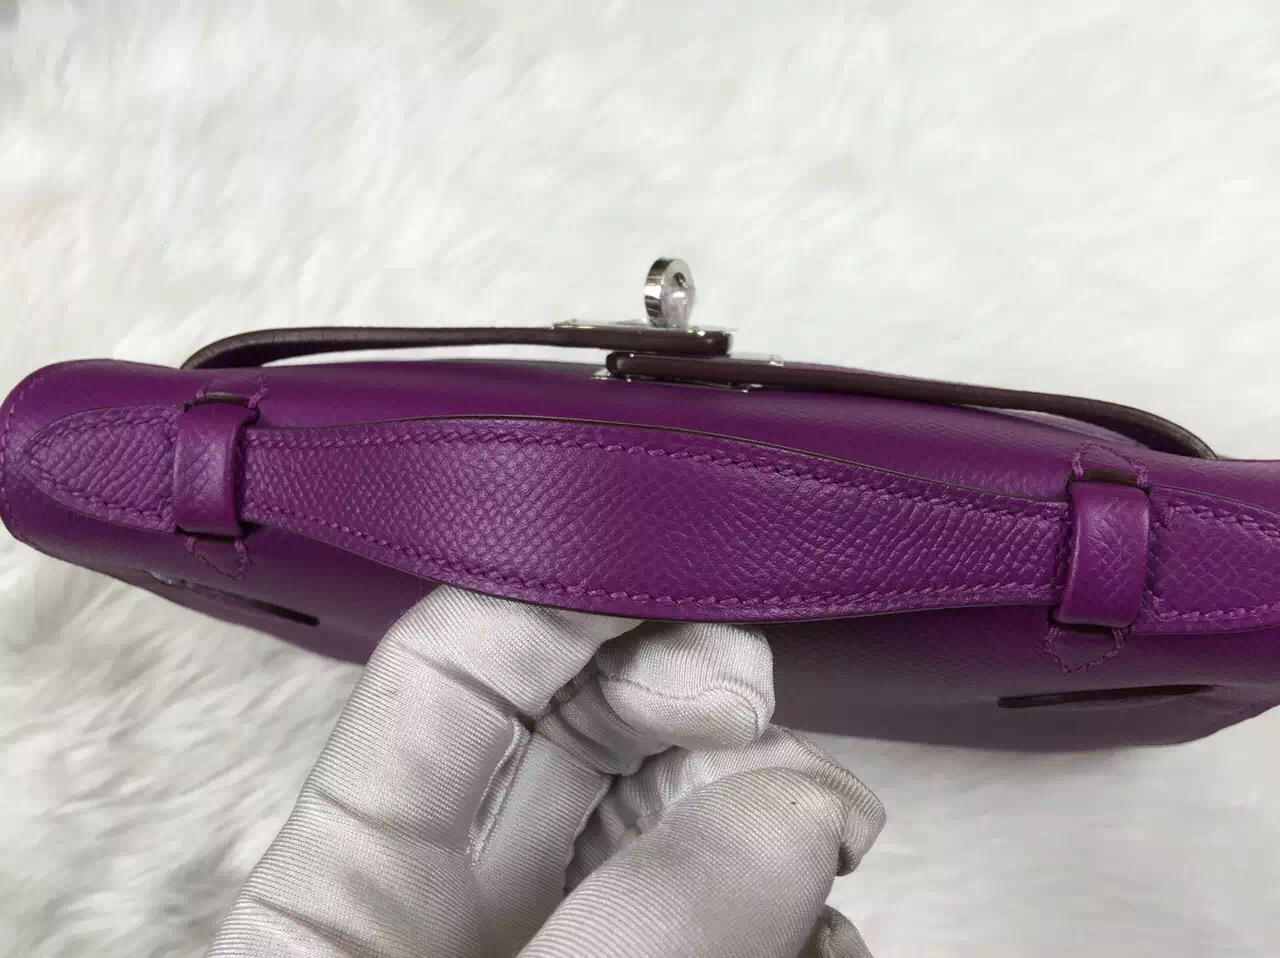 New Fashion Bag Hermes Mini Kelly Bag P9 Anemone Purple Epsom Leather Tote Bag